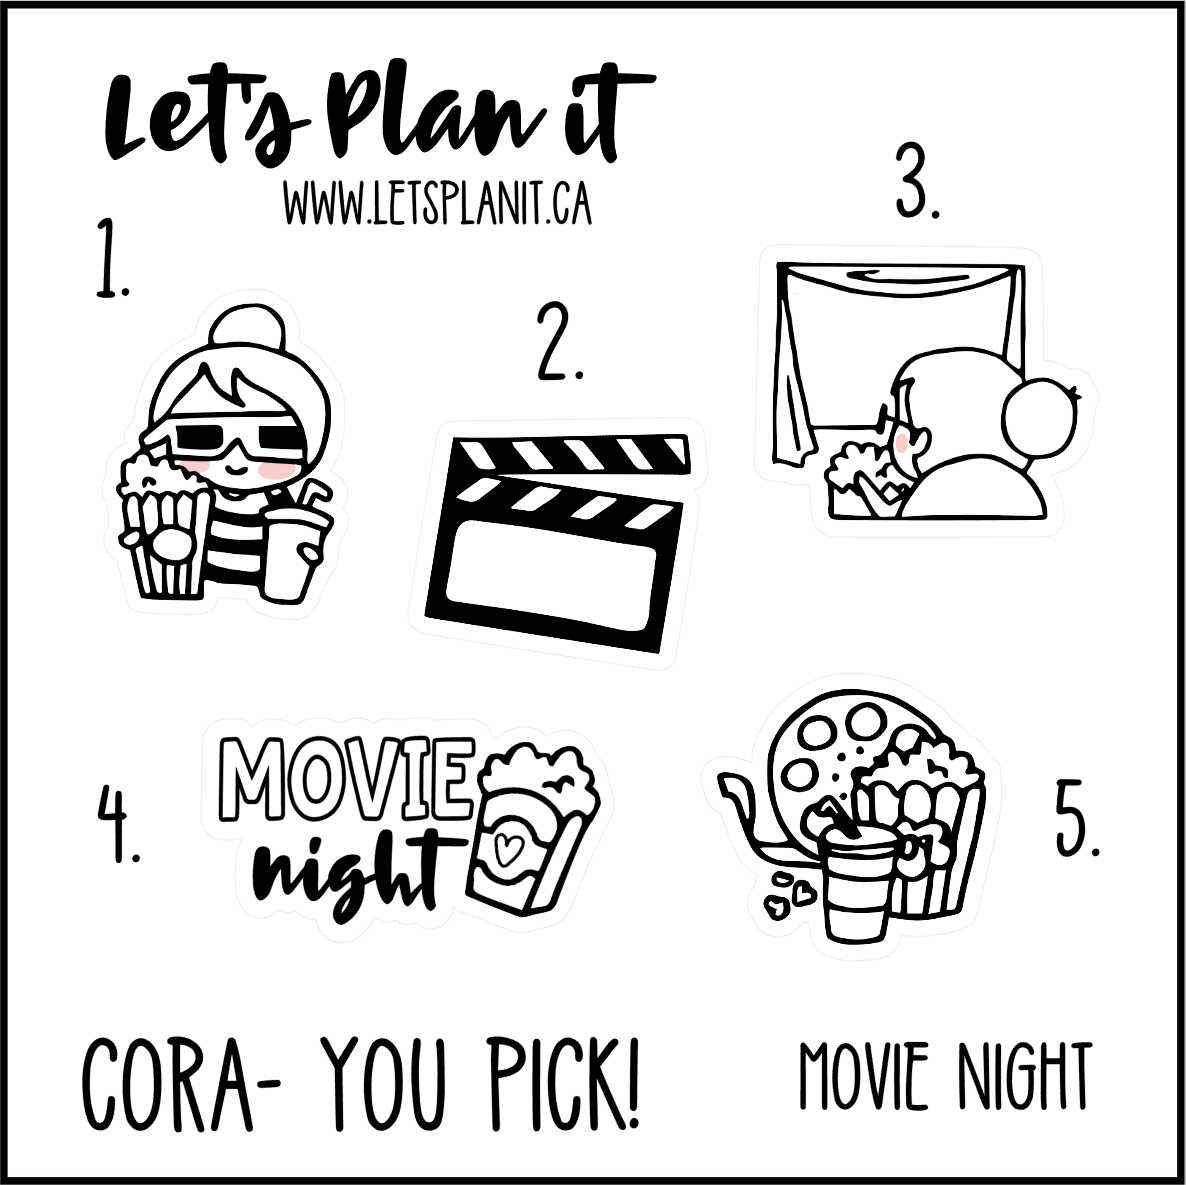 Cora-u-pick- Movie Night